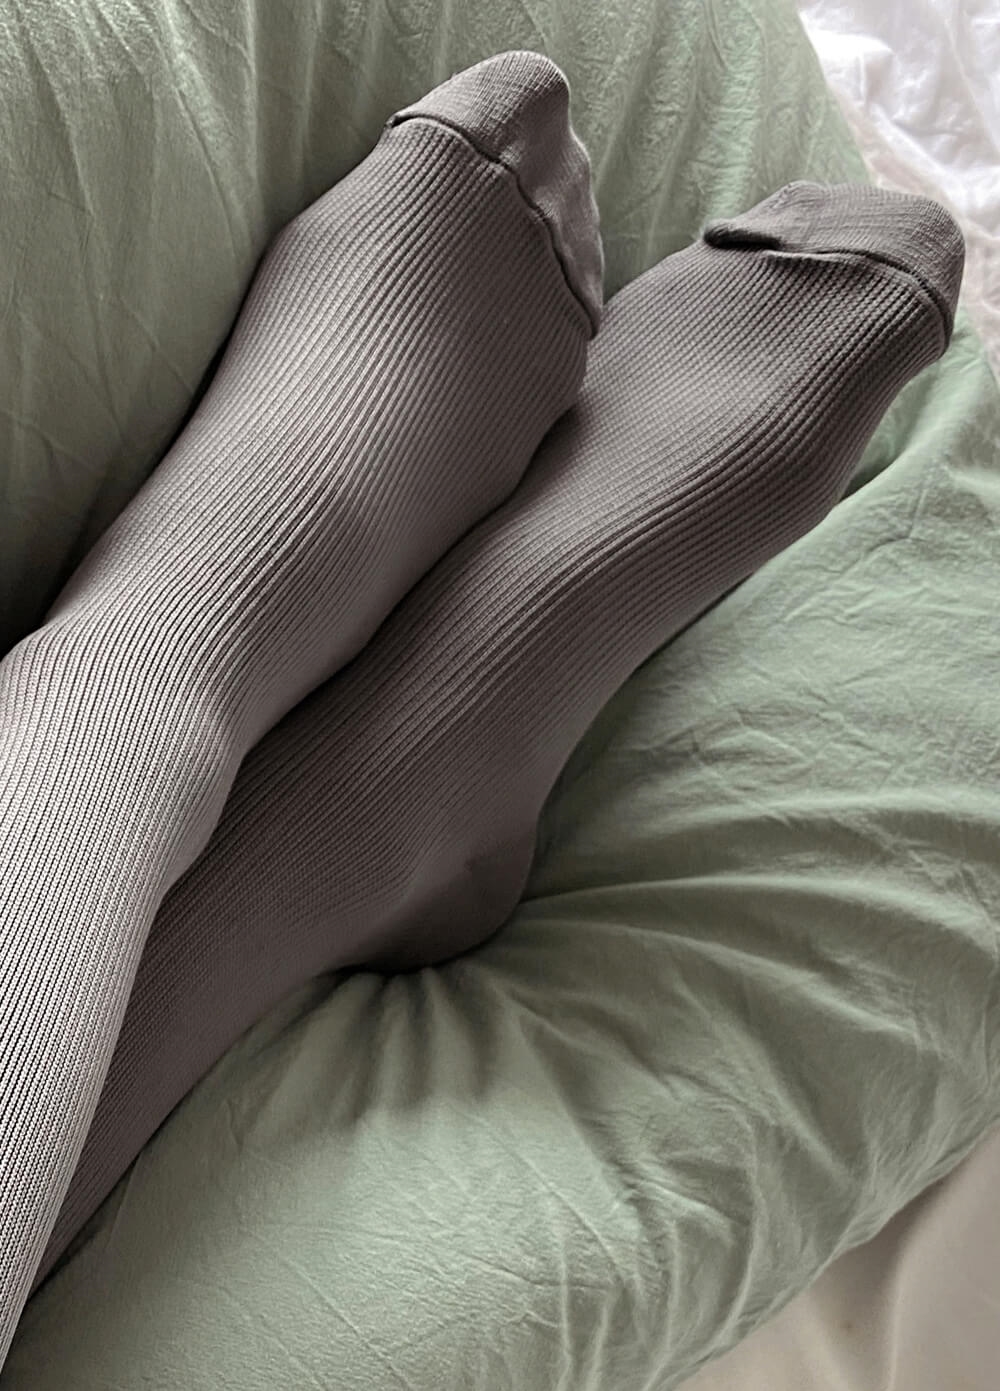 Mama Sox - Renew Maternity Compression Socks in Charcoal